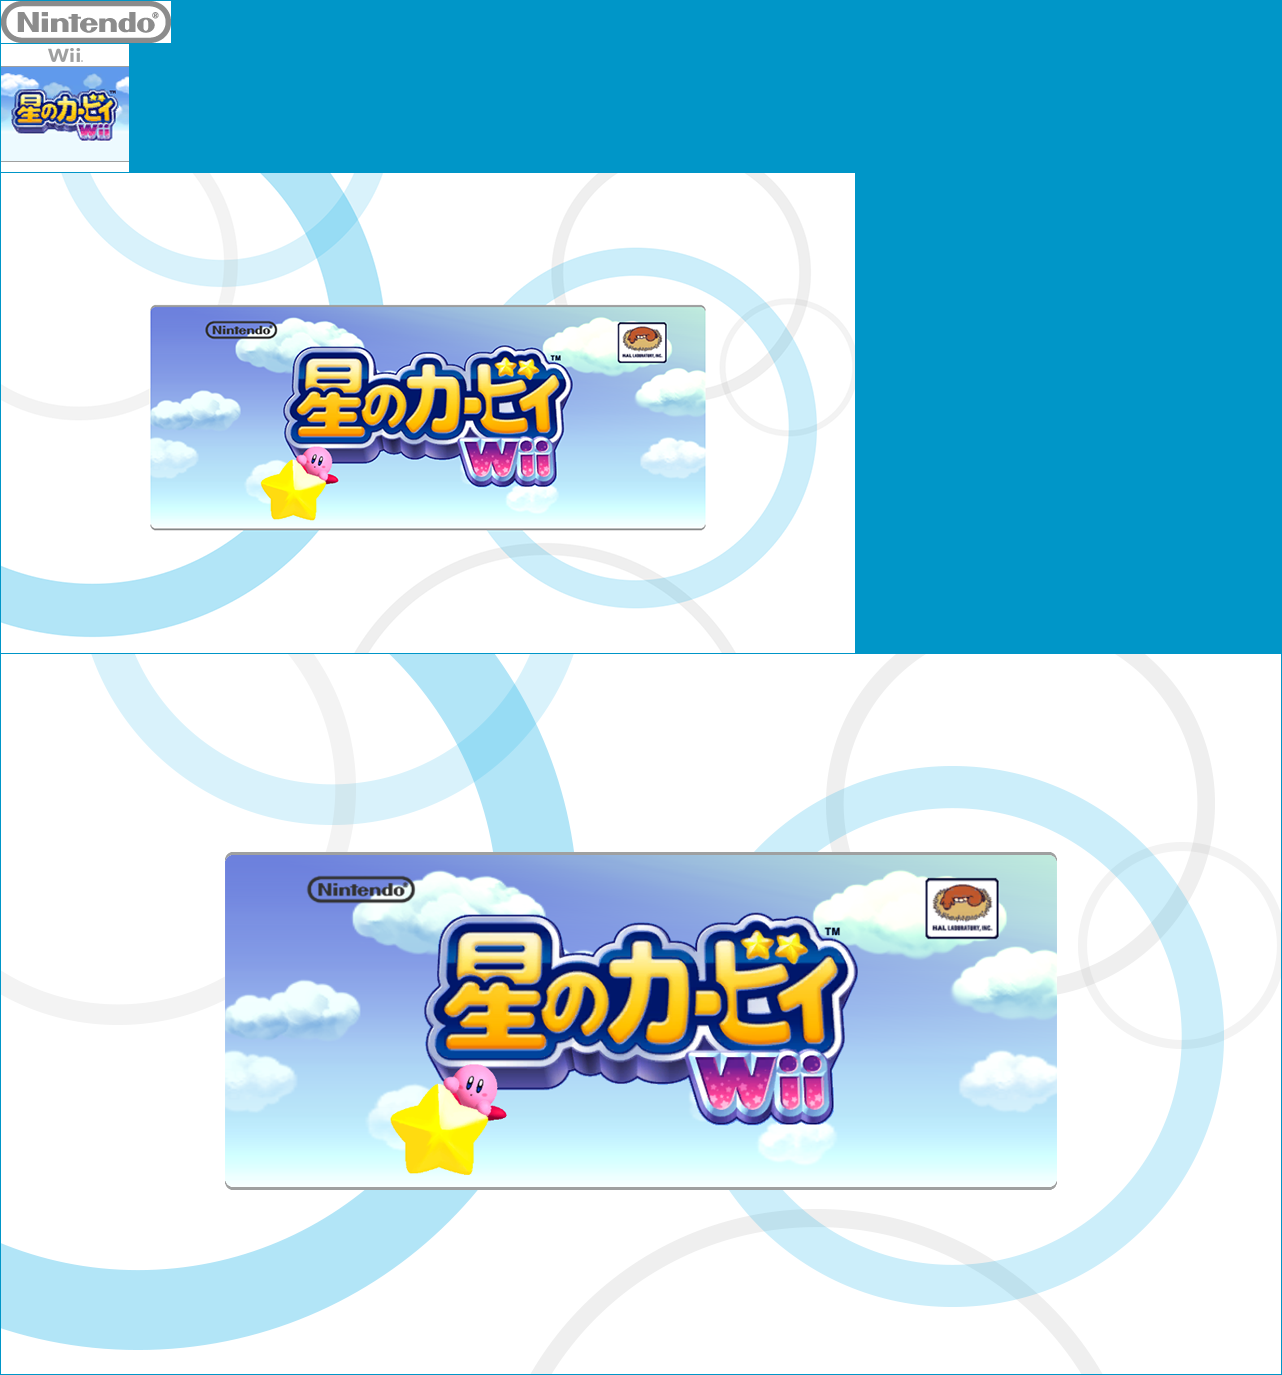 Virtual Console - Hoshi no Kirby Wii